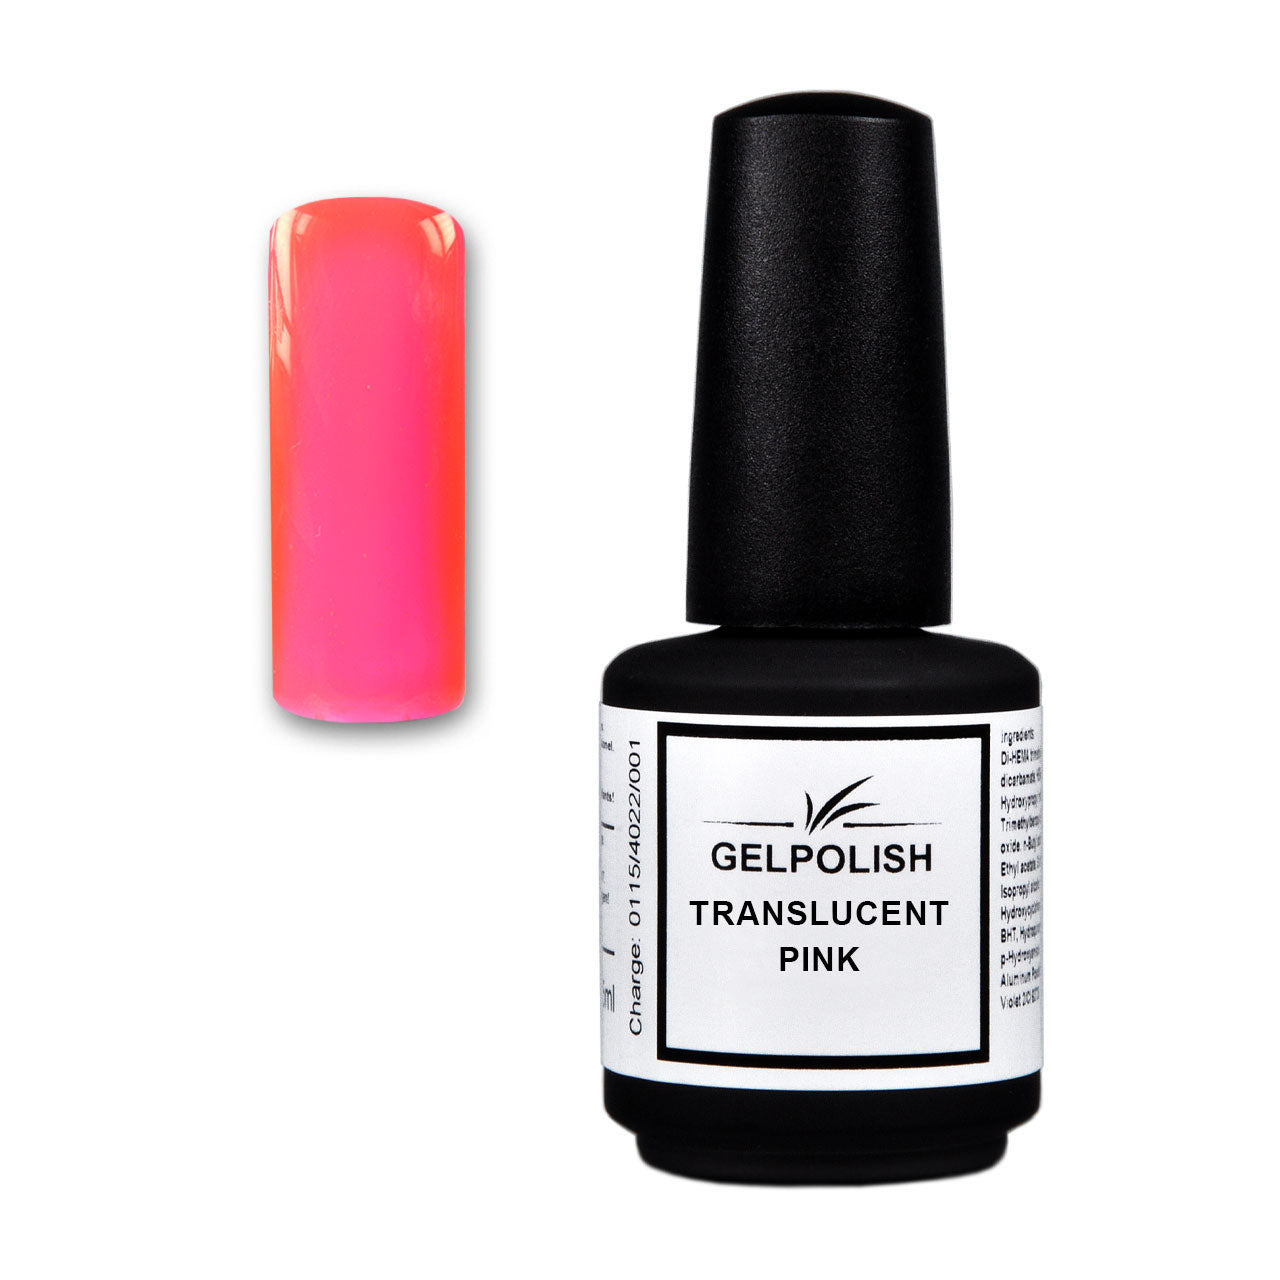 Gelpolish VSP Translucent Pink